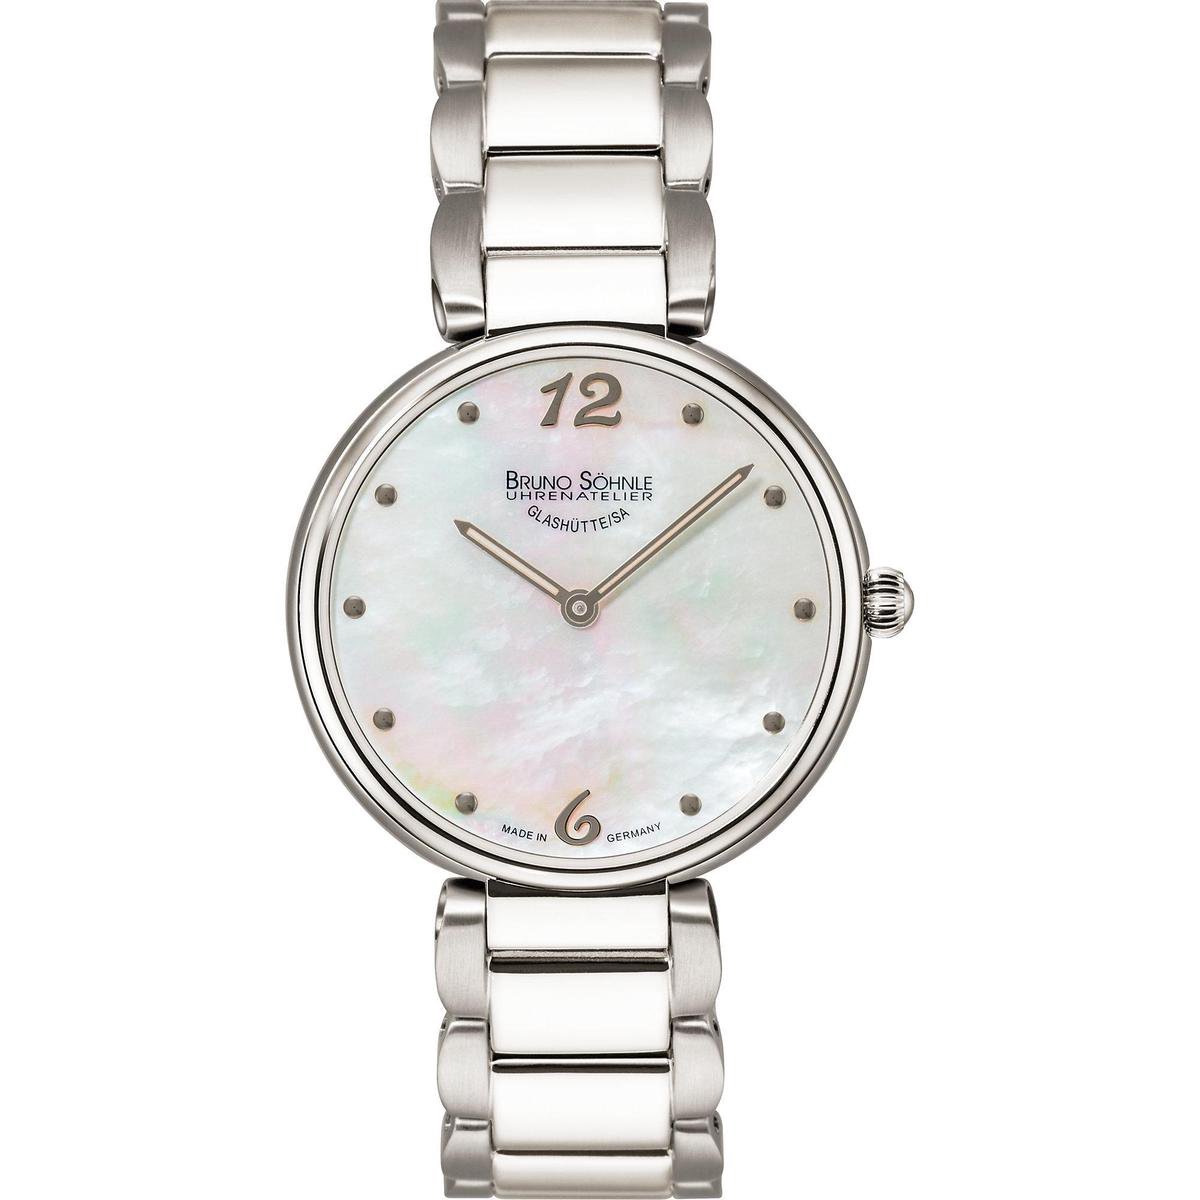 Bruno Soehnle dames horloges quartz analoog One Size 87183432